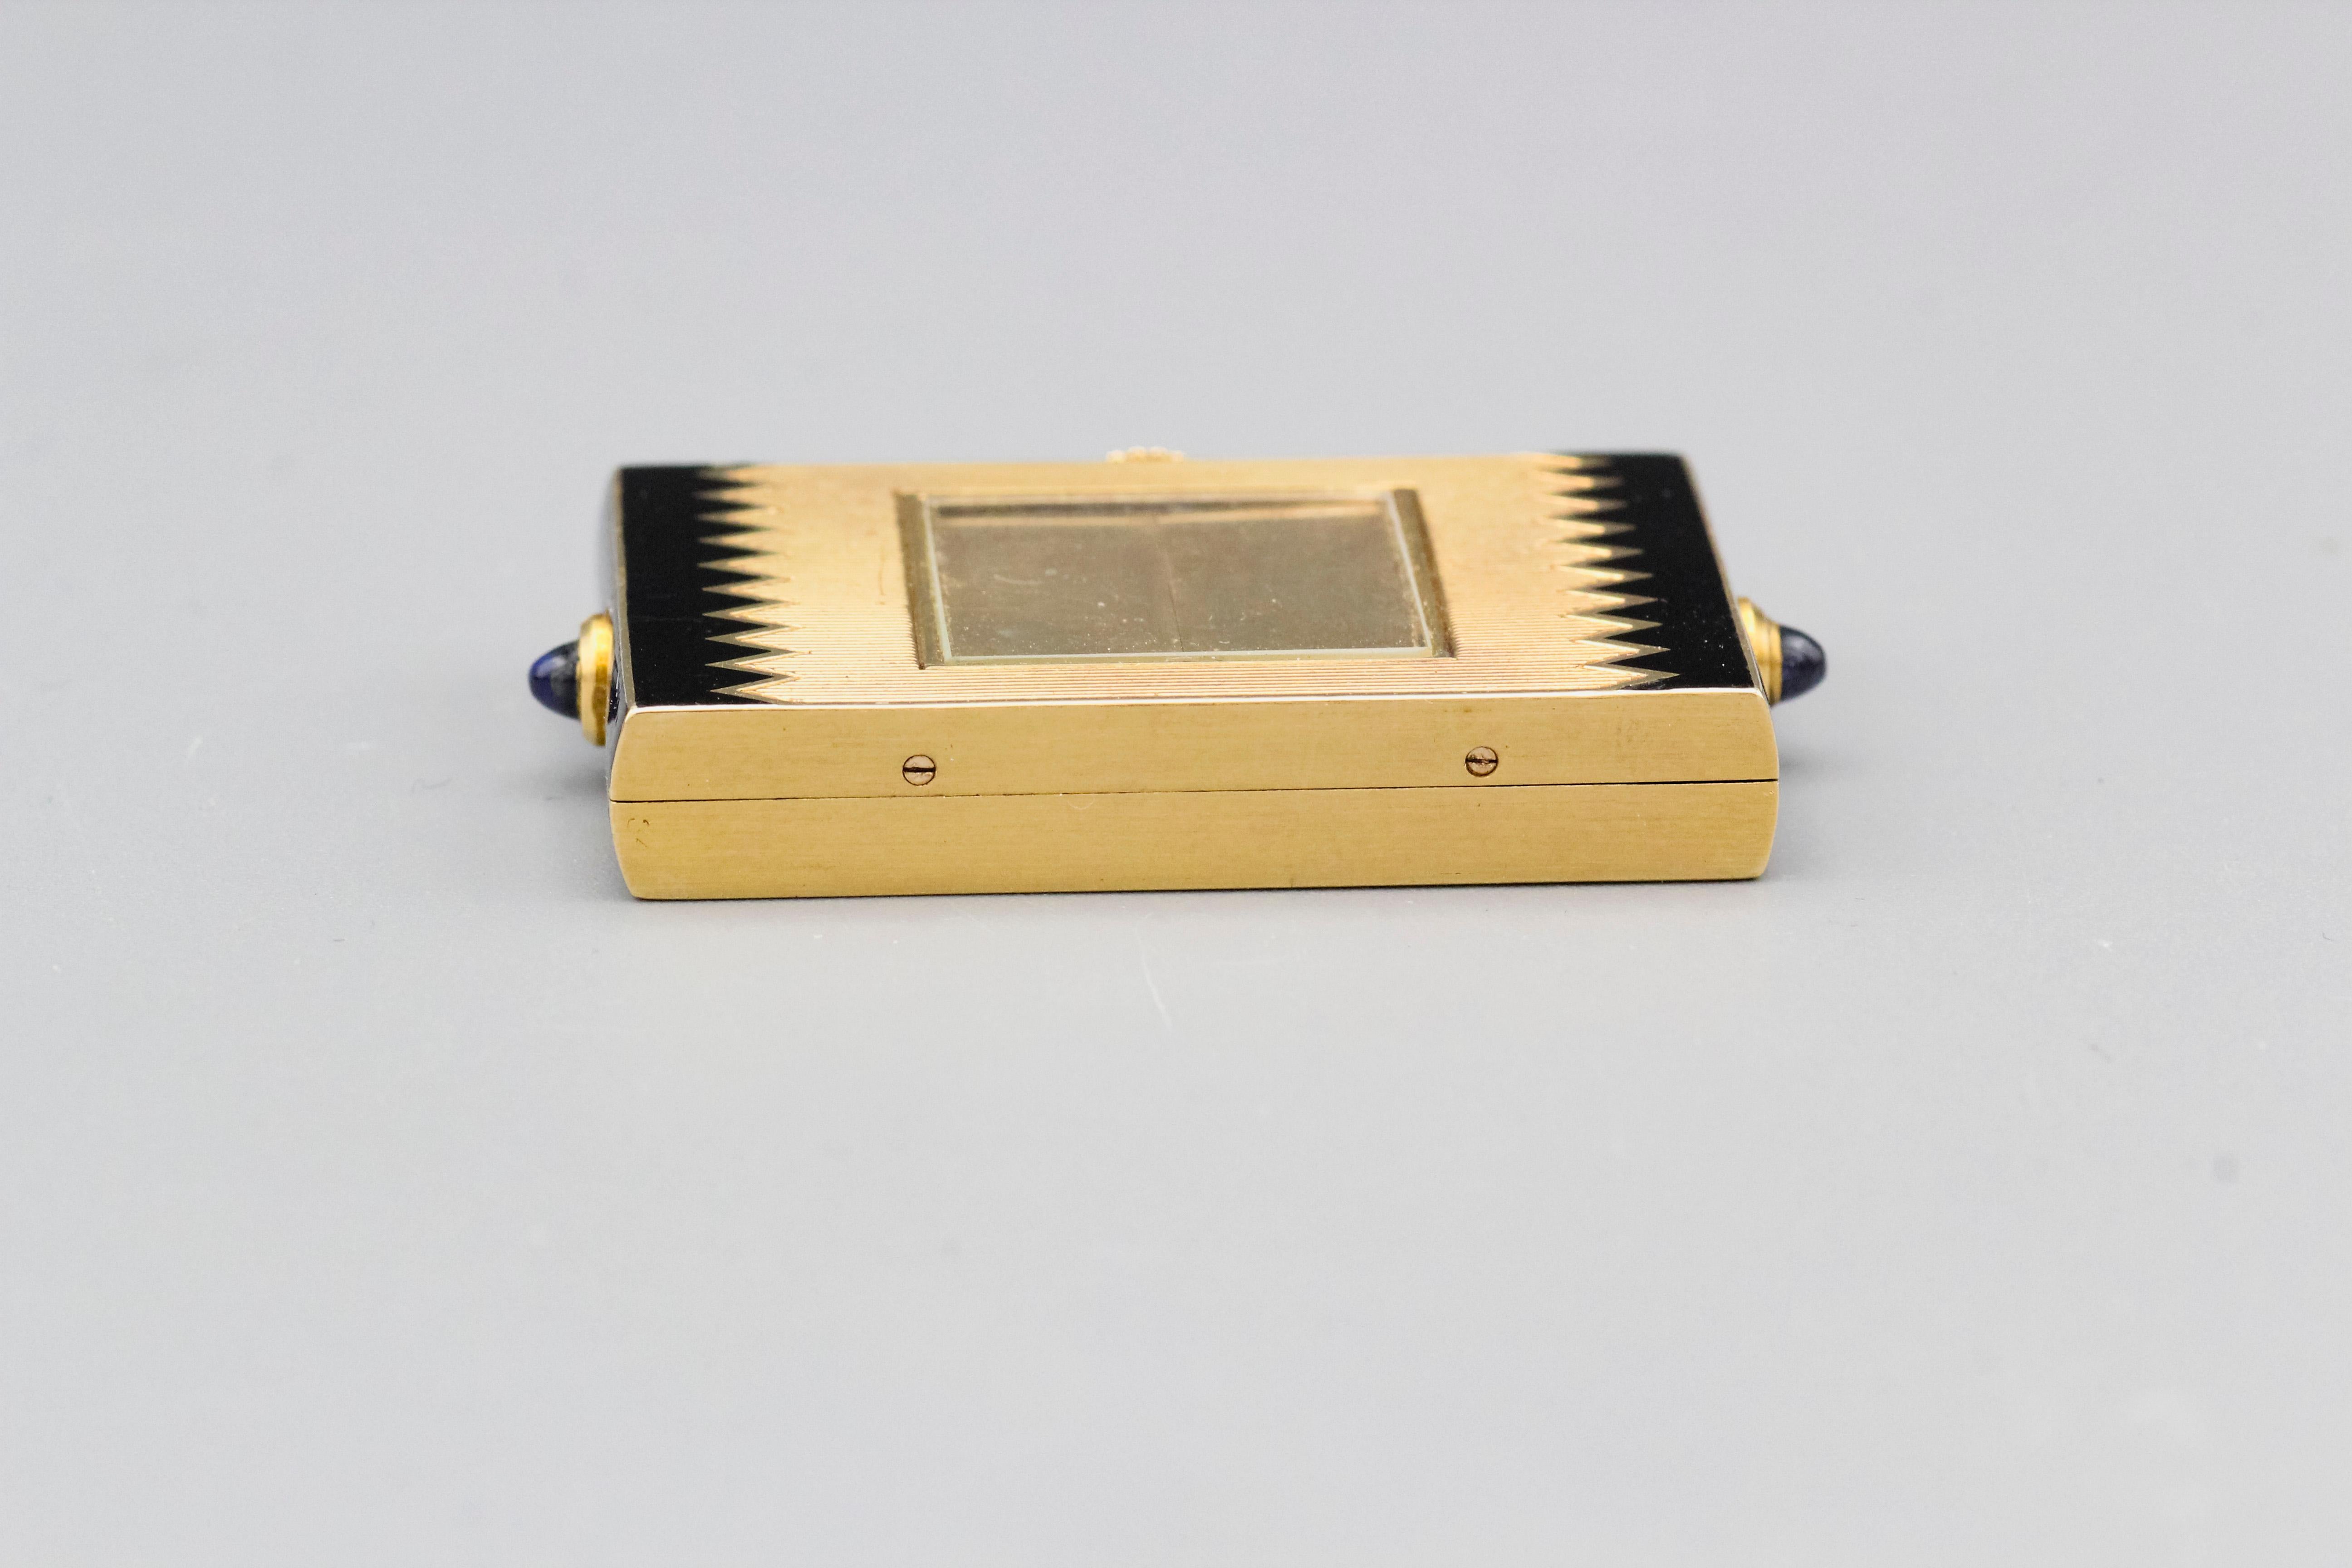 Cartier Enamel Sapphire 18k Gold Traveling Shutter Mechanical Watch Clock For Sale 3